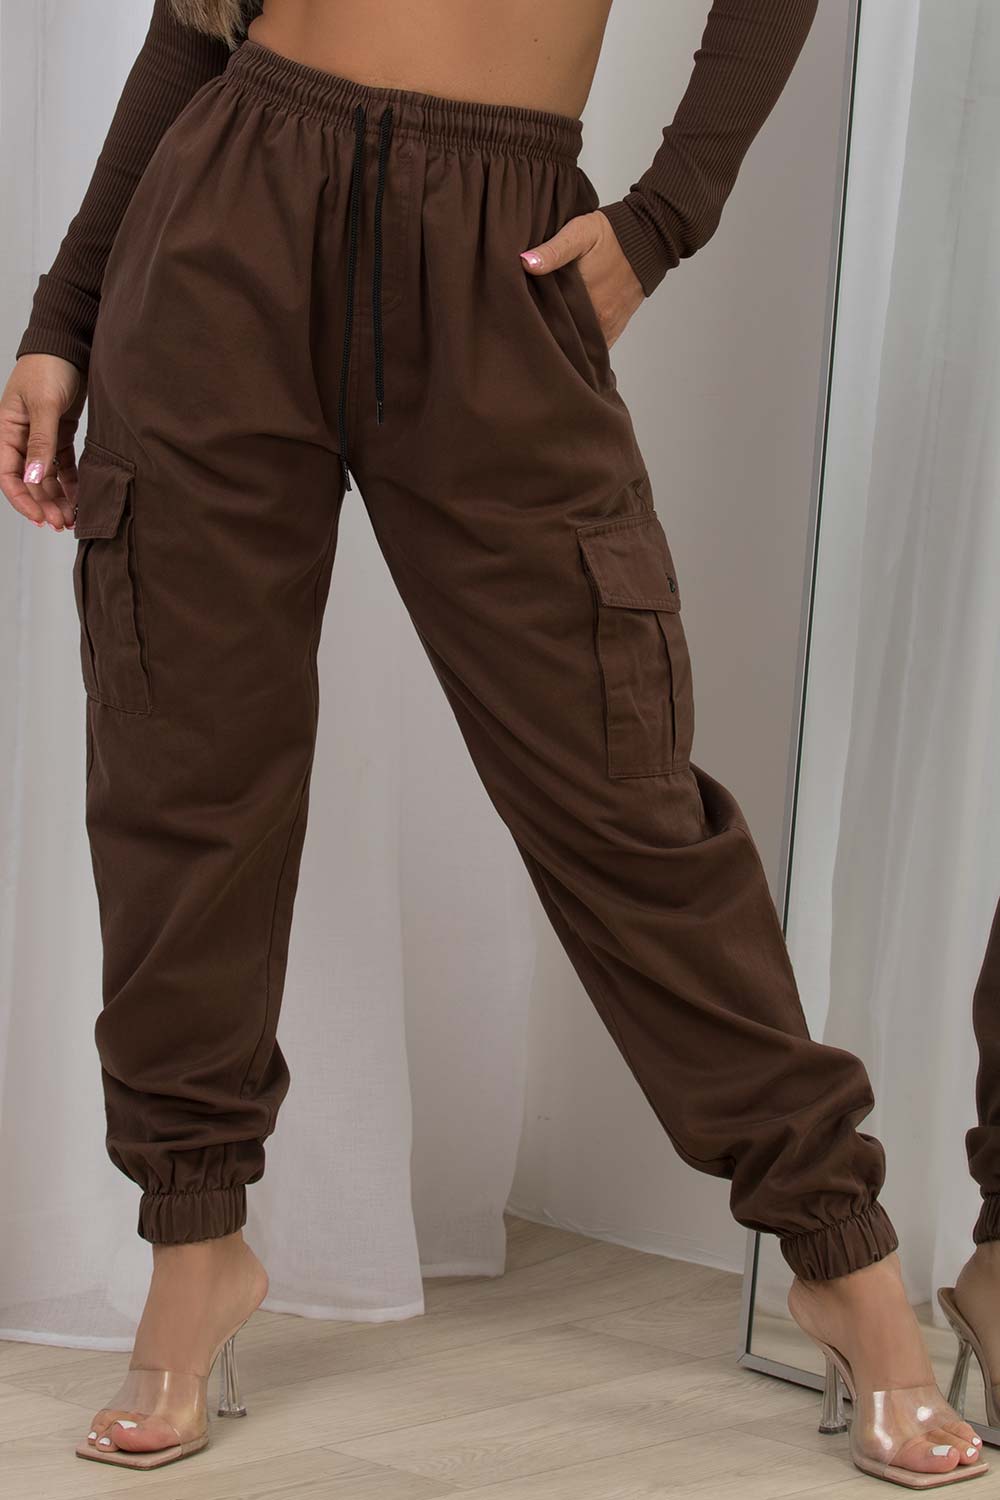 Black Cuffed Cargo Pants High Rise Stretch Combat Utility Trousers  eBay